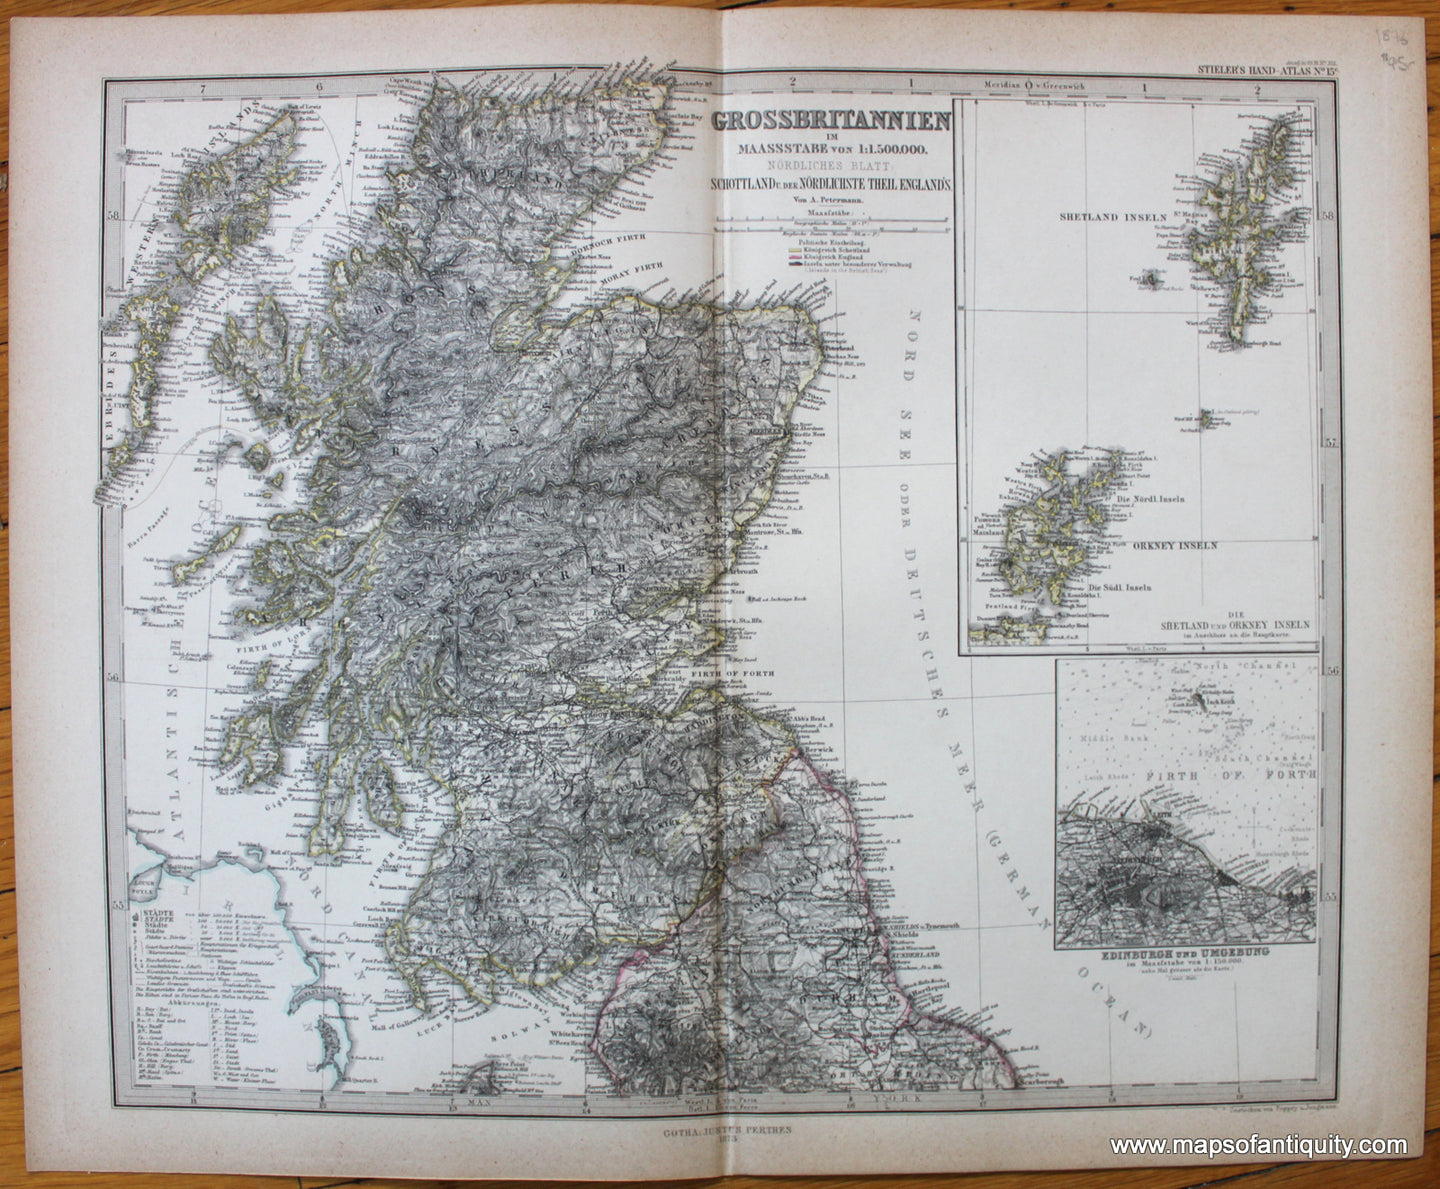 Antique-Map-Grossbritannien-Scotland-England-Great-Britain-United-Kingdom-Stieler-1876-1870s-1800s-19th-century-Maps-of-Antiquity